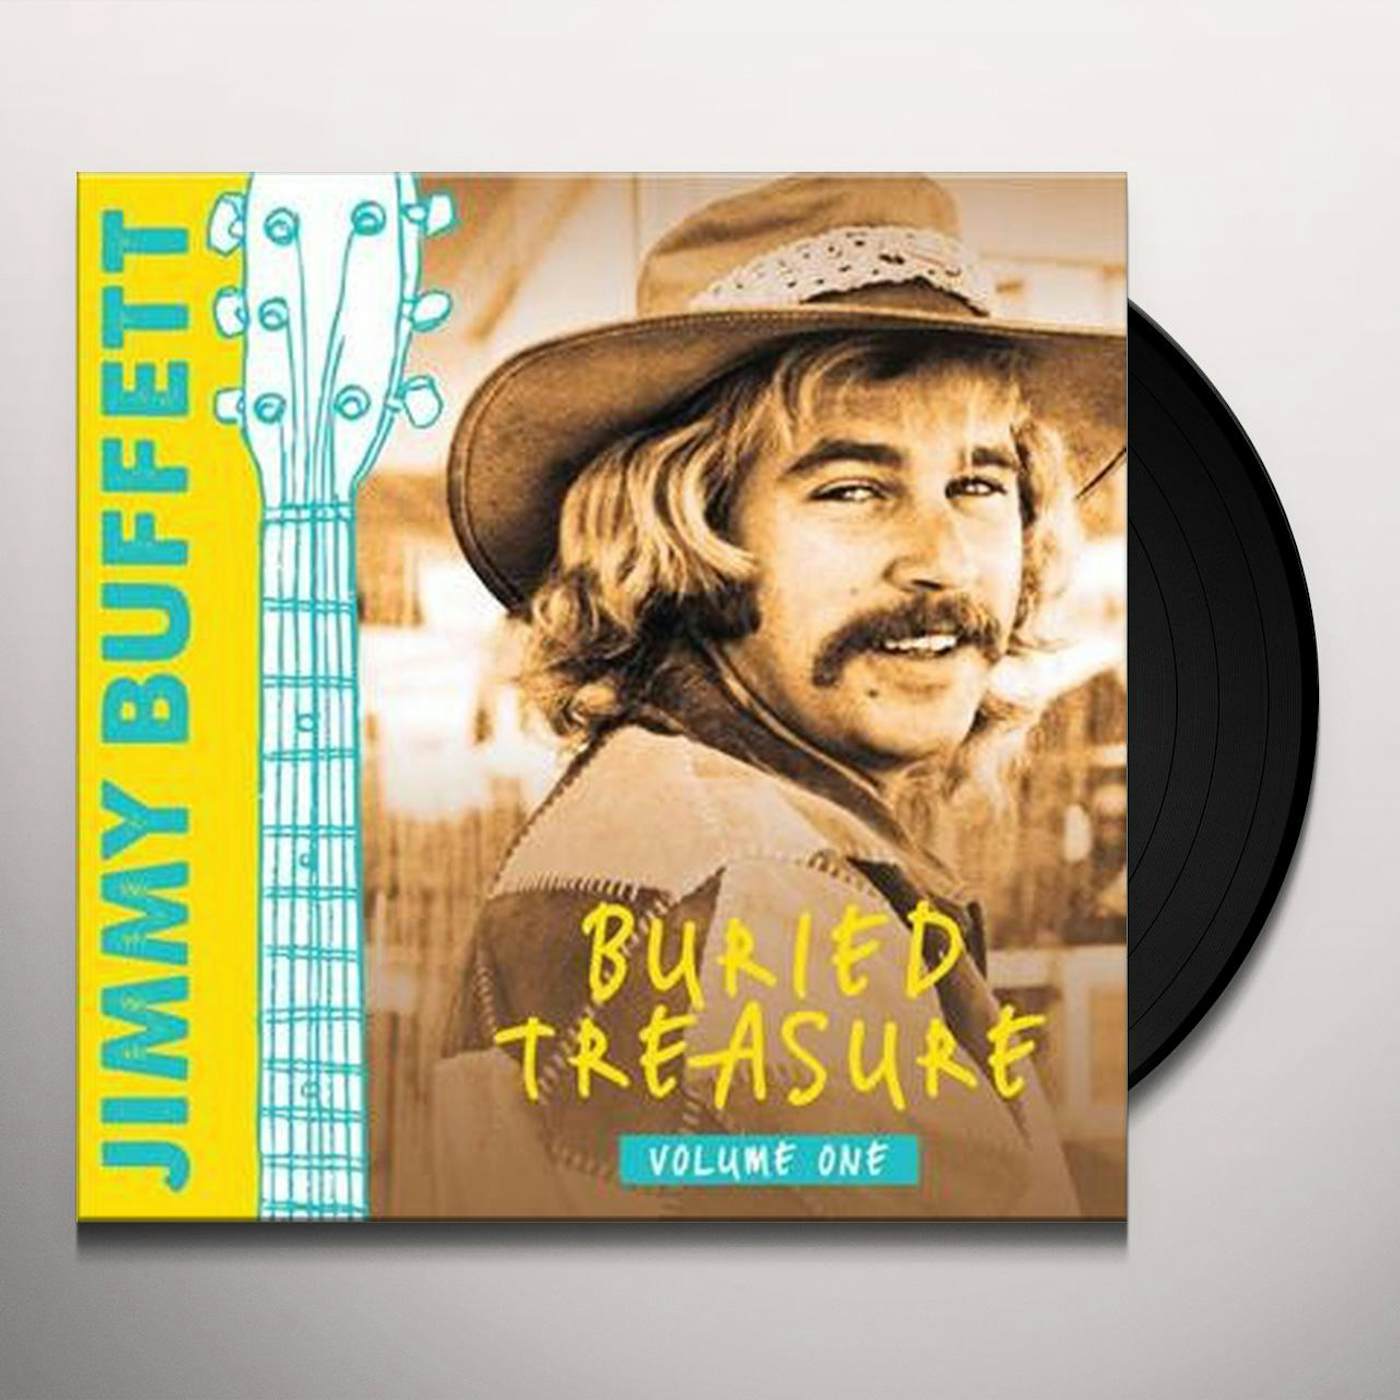 Jimmy Buffett Buried Treasure: Volume 1 Vinyl Record